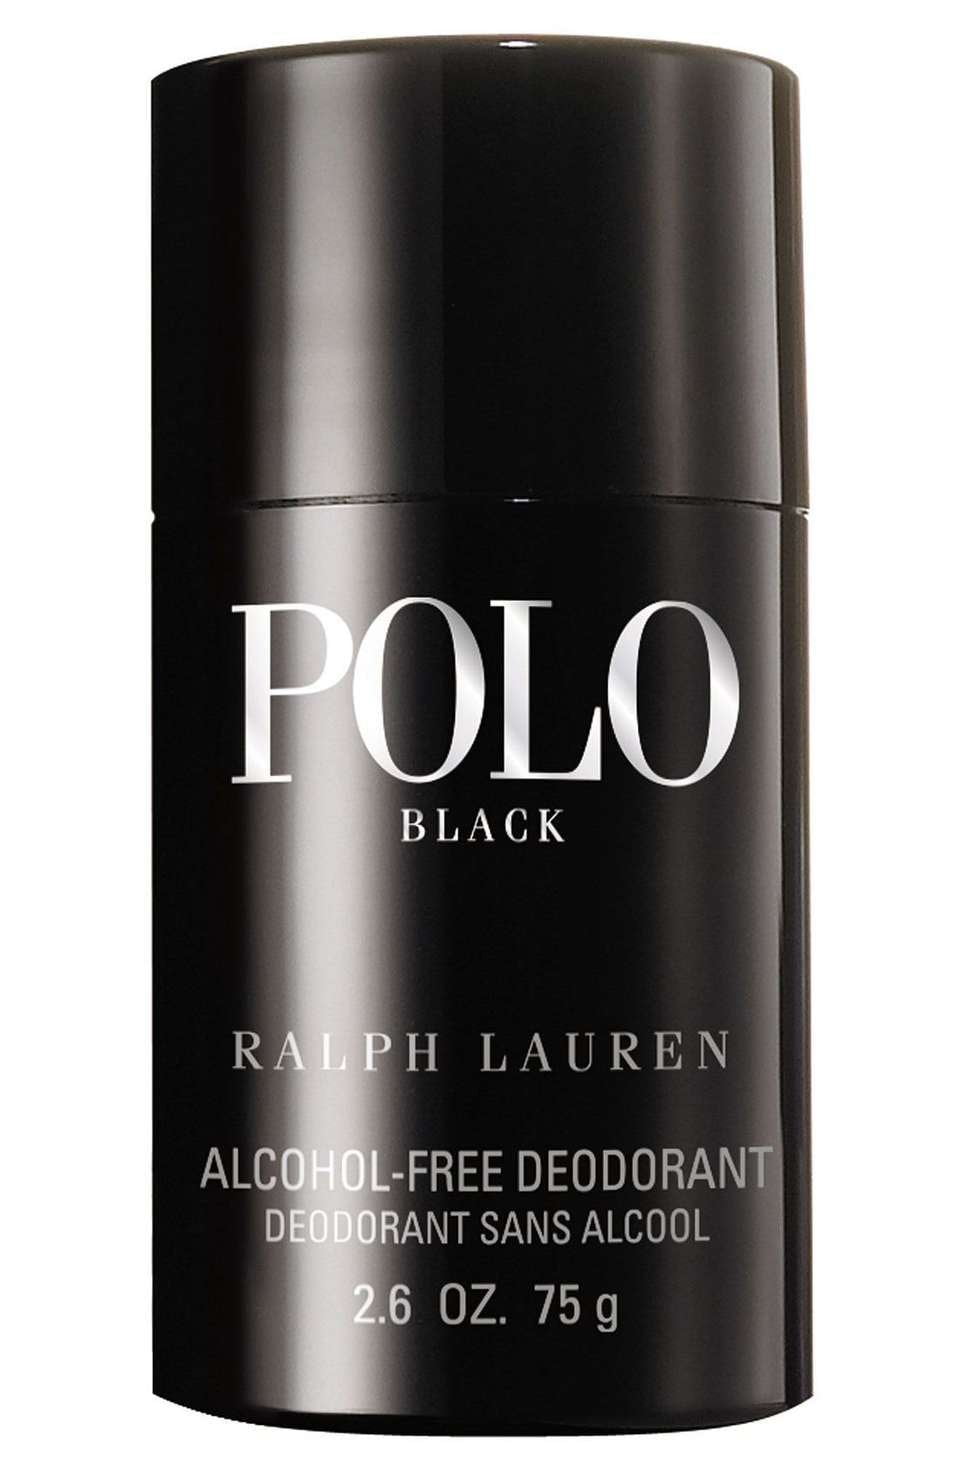 polo black deodorant